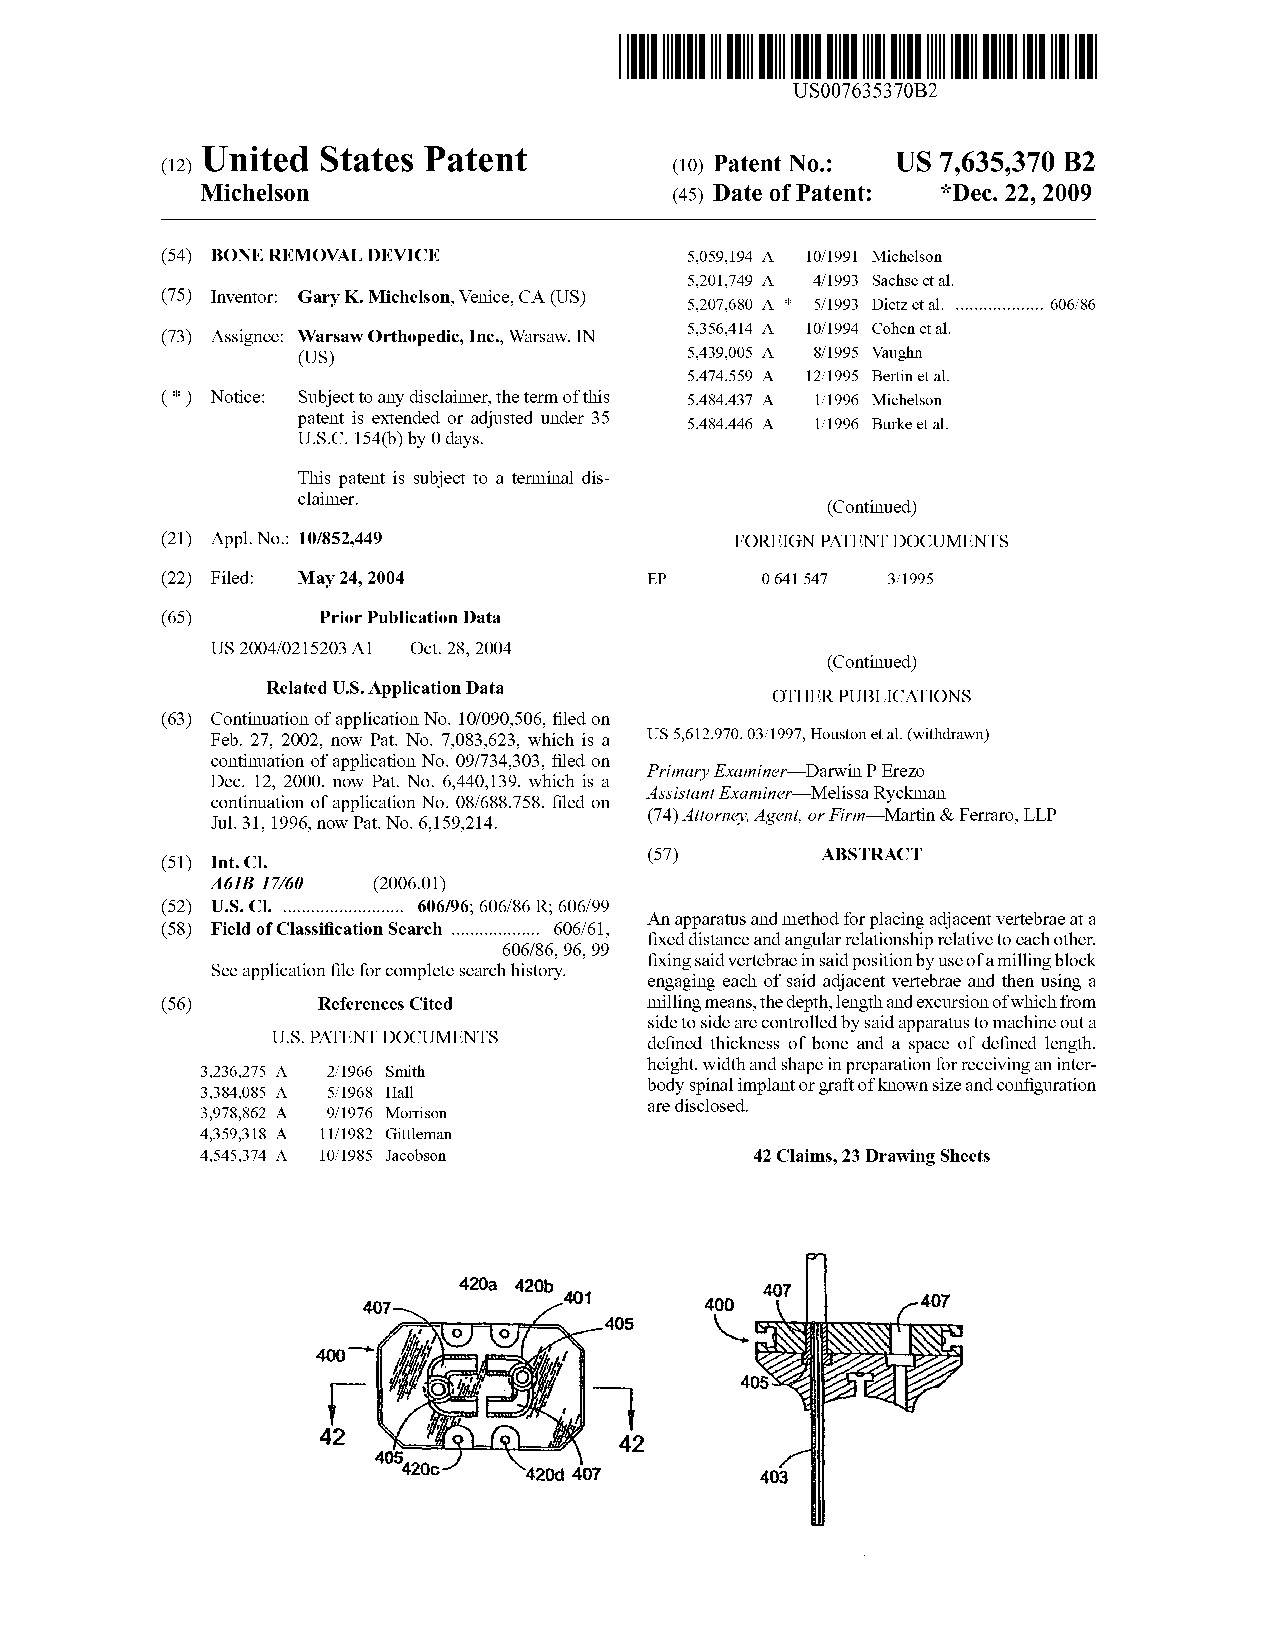 Bone removal device - Patent 7,635,370